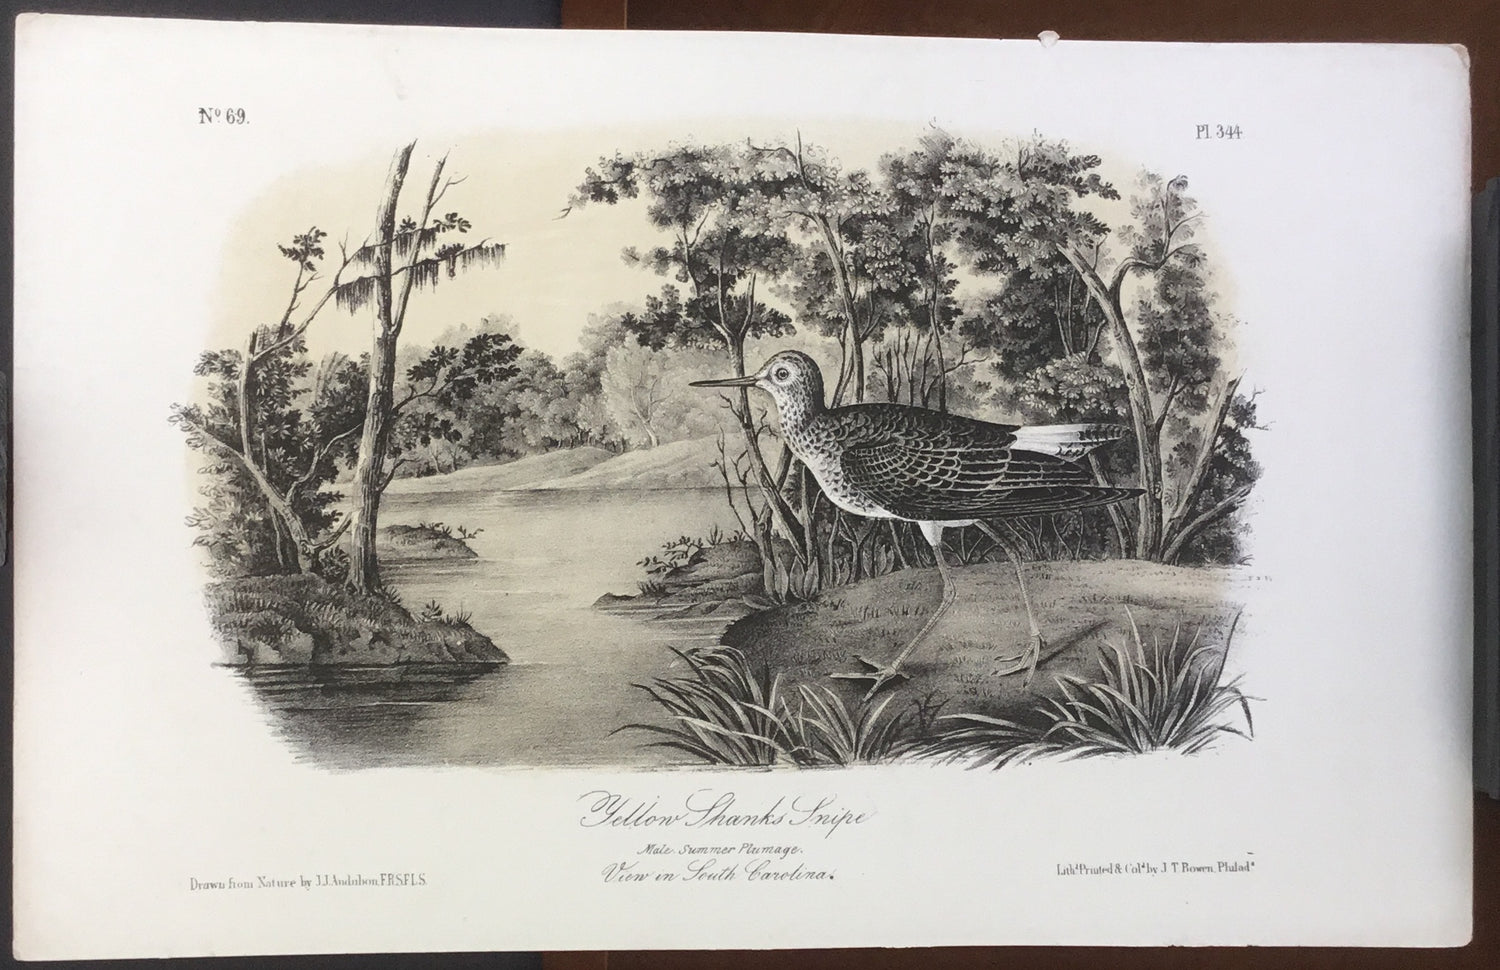 Audubon Octavo Yellow Shanks Snipe, plate 344, uncolored test sheet, 7 x 11